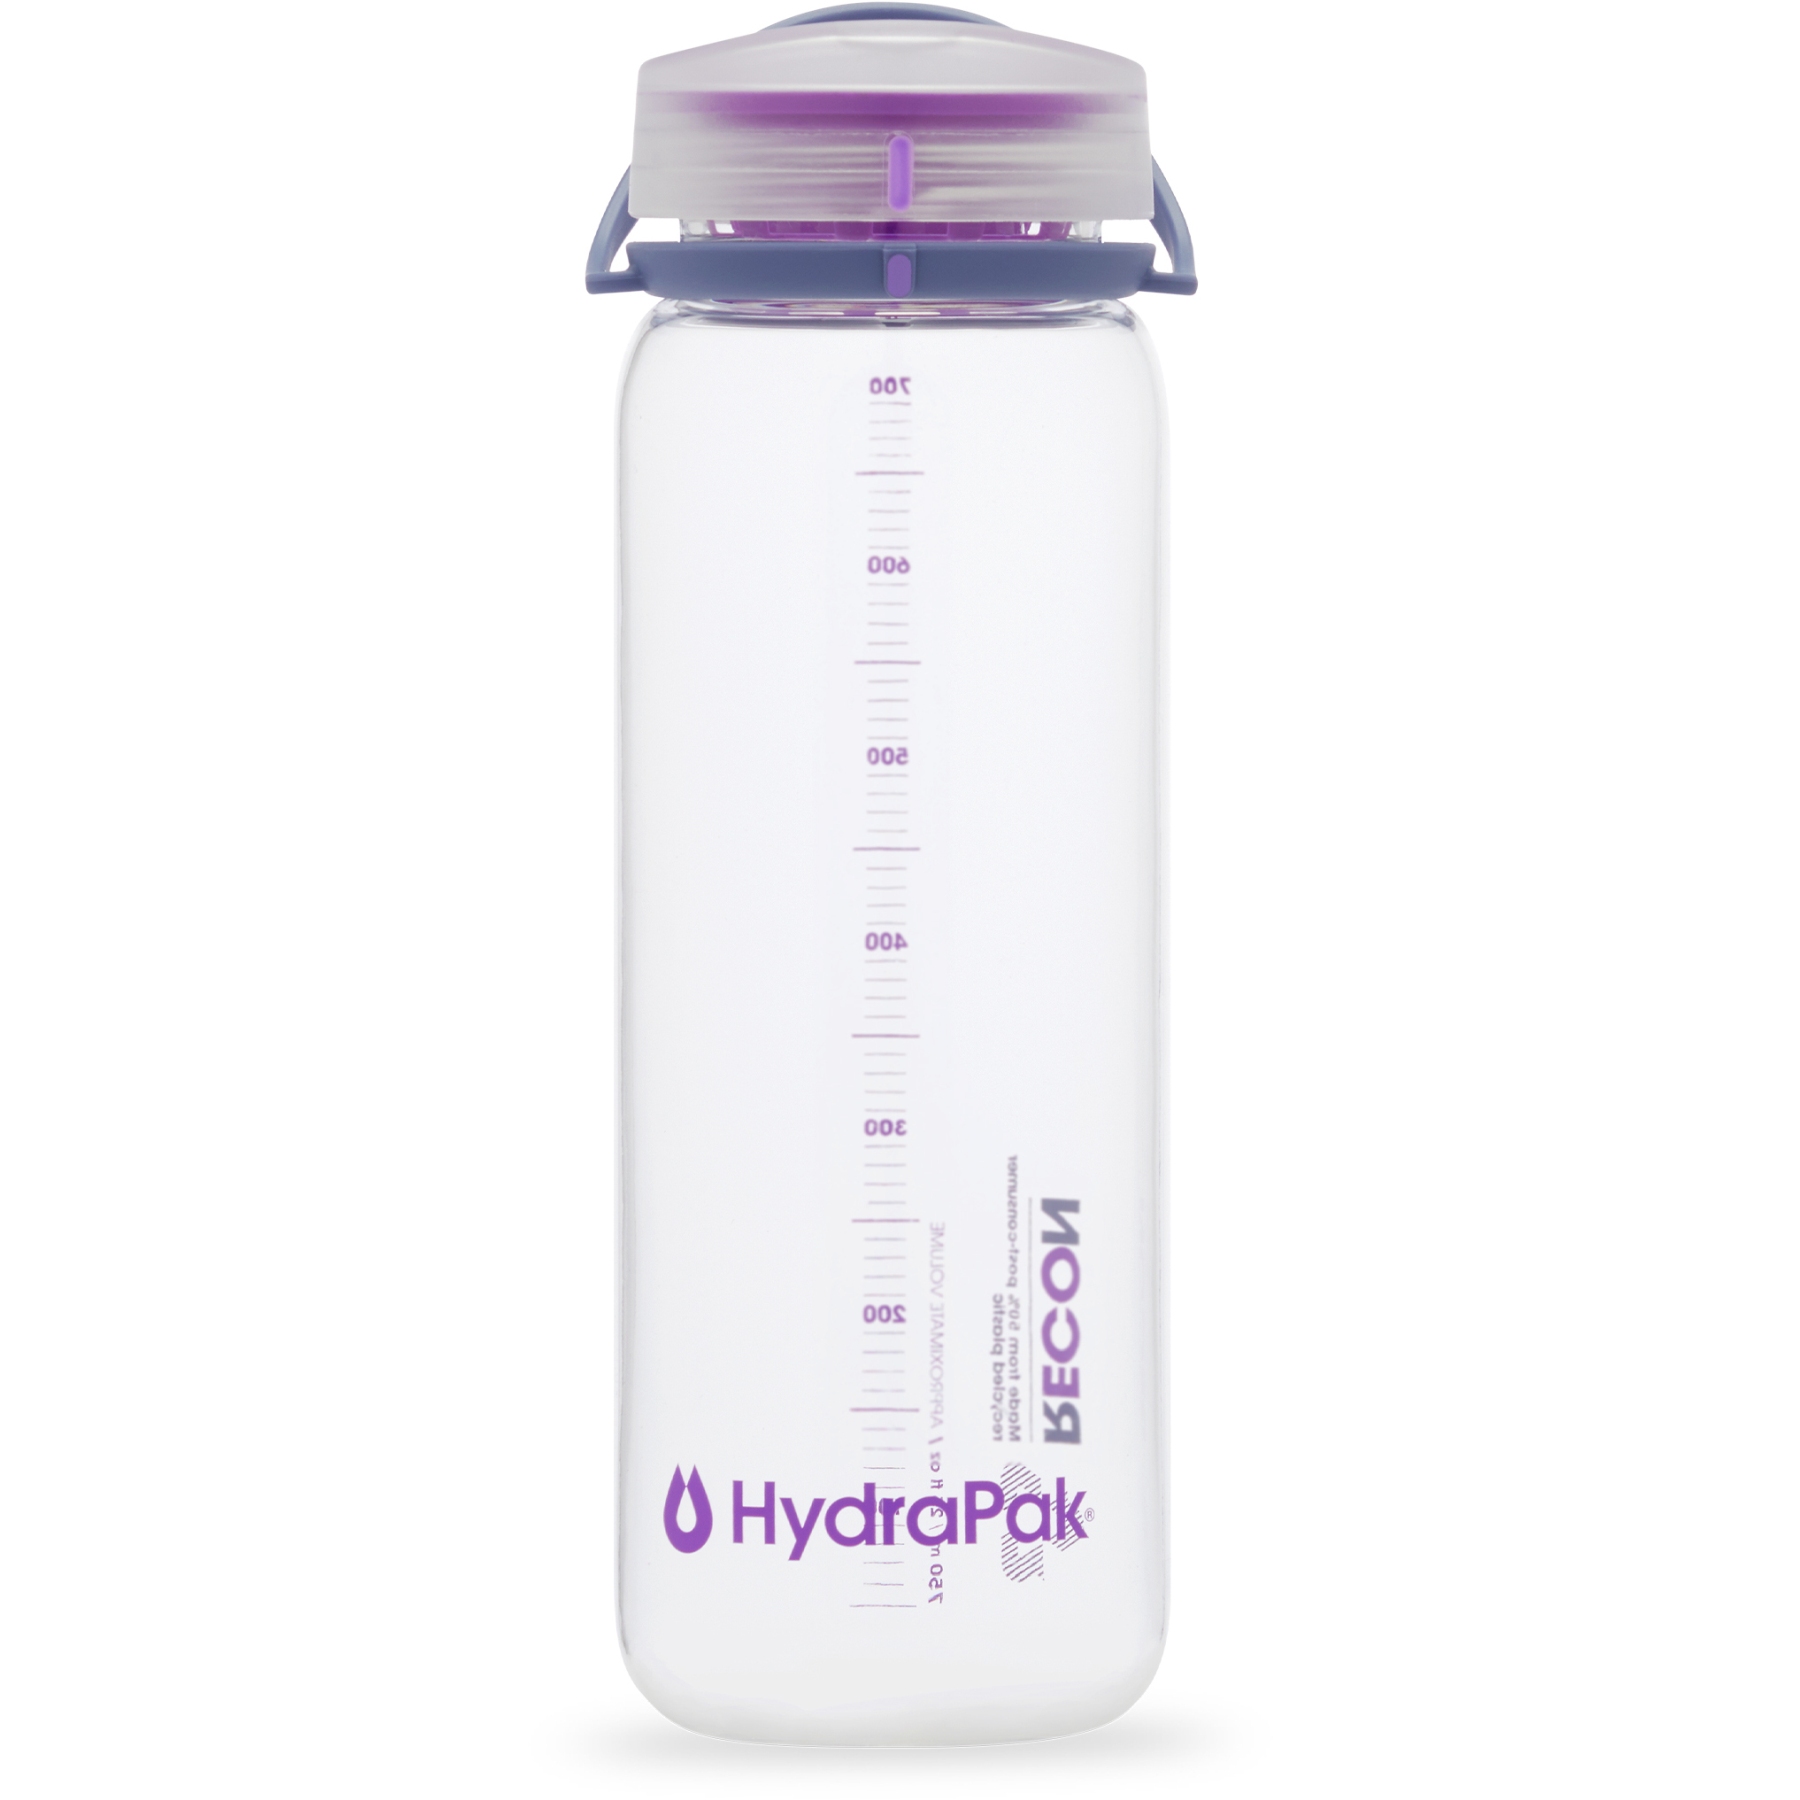 Productfoto van Hydrapak Recon™ Drinkfles - 750ml - Clear/Iris/Violet